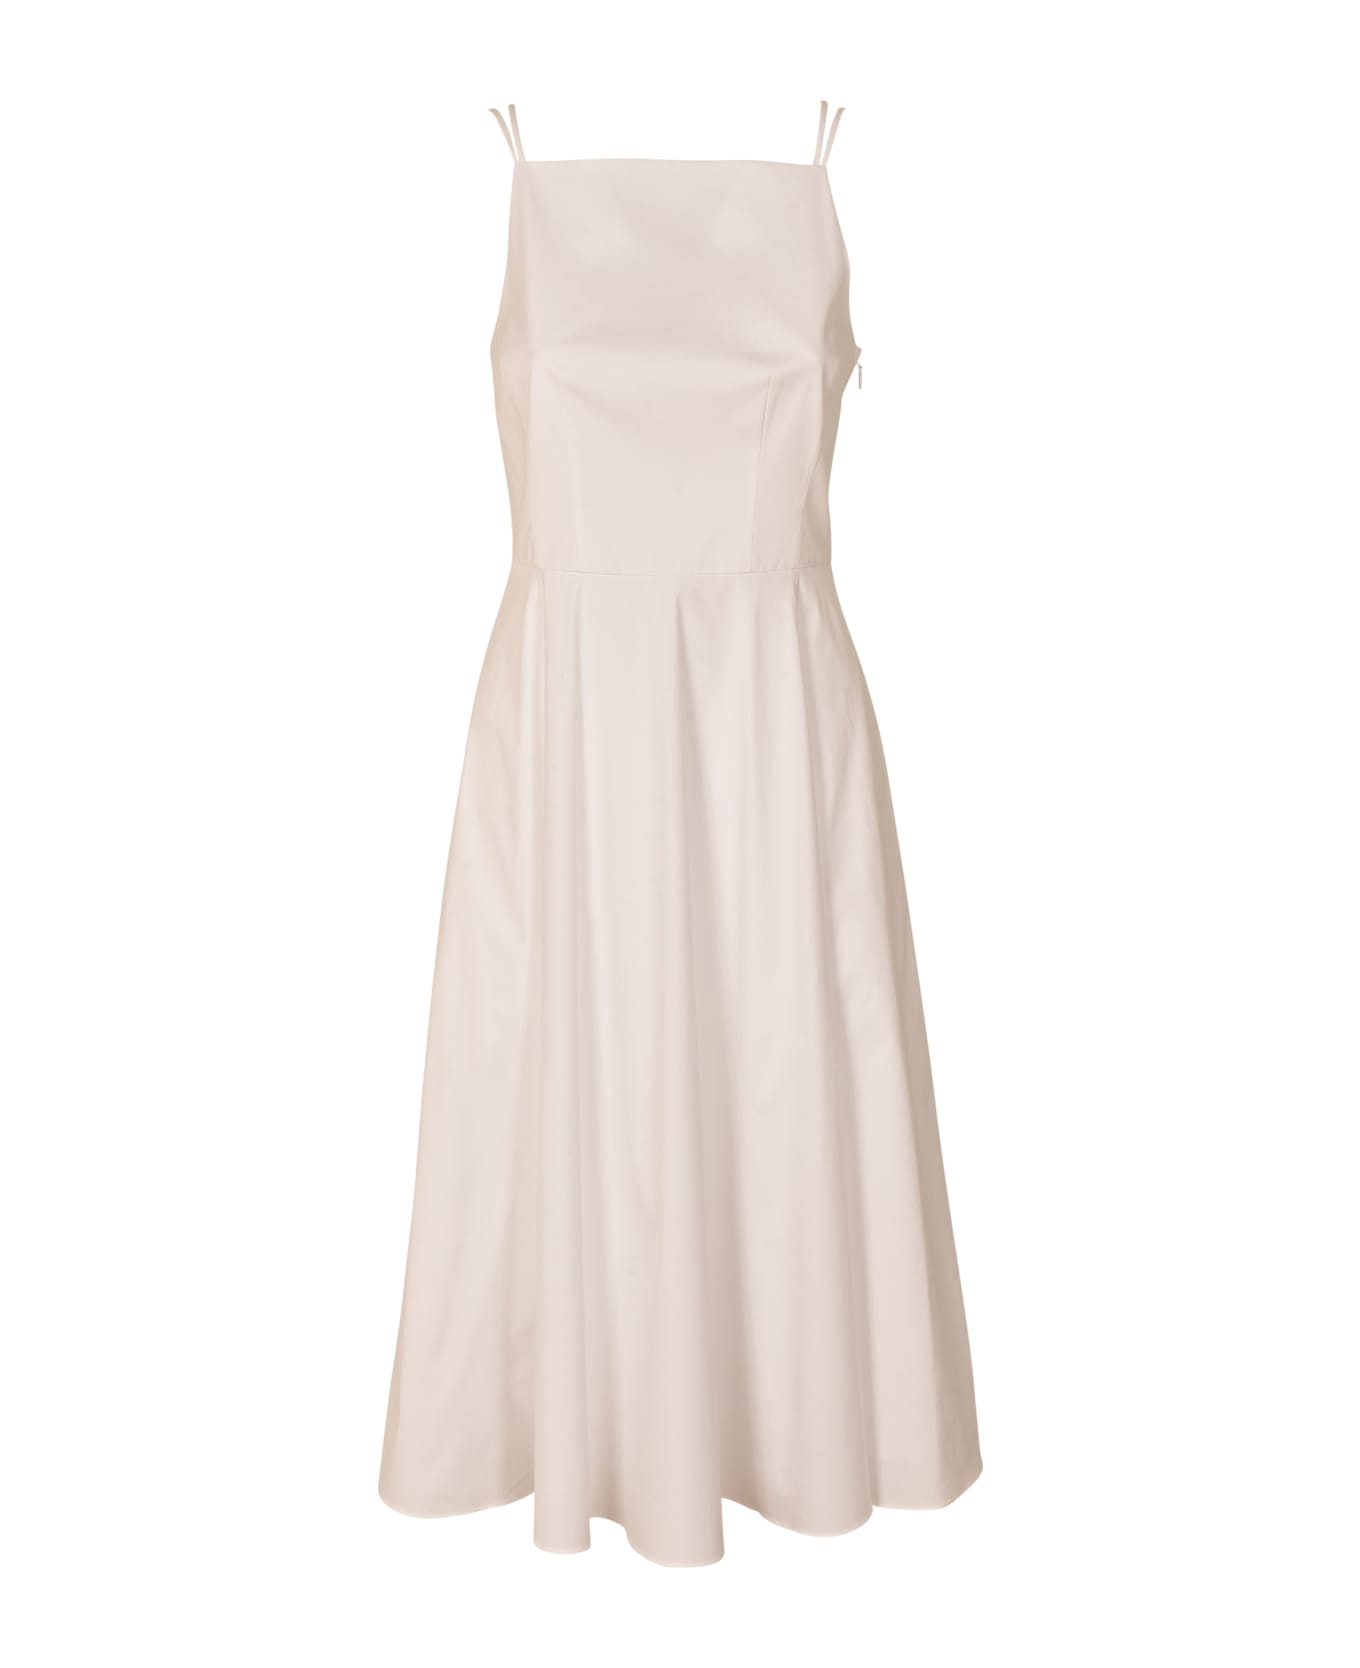 Theory Sleeveless Classic Dress - White